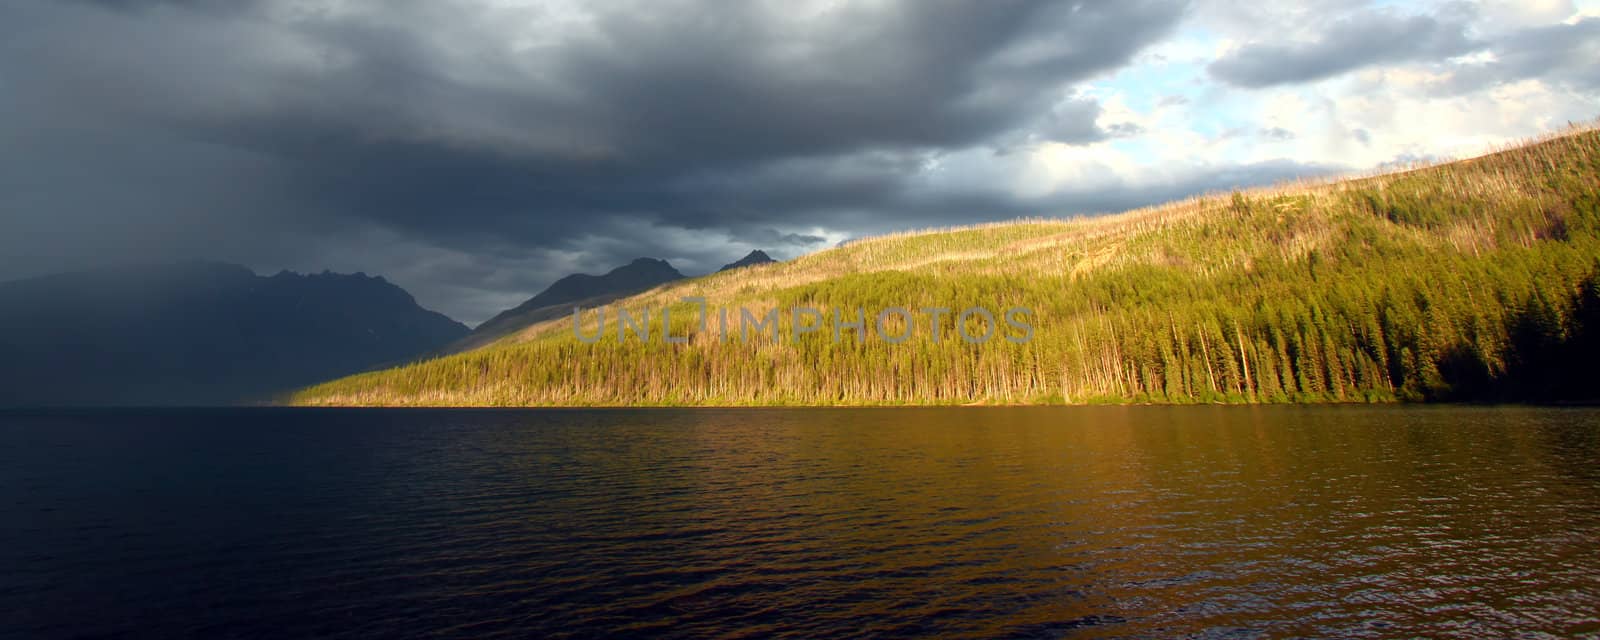 Sunlight illuminates the shoreline of Kintla Lake against a stormy sky in Glacier National Park - USA.